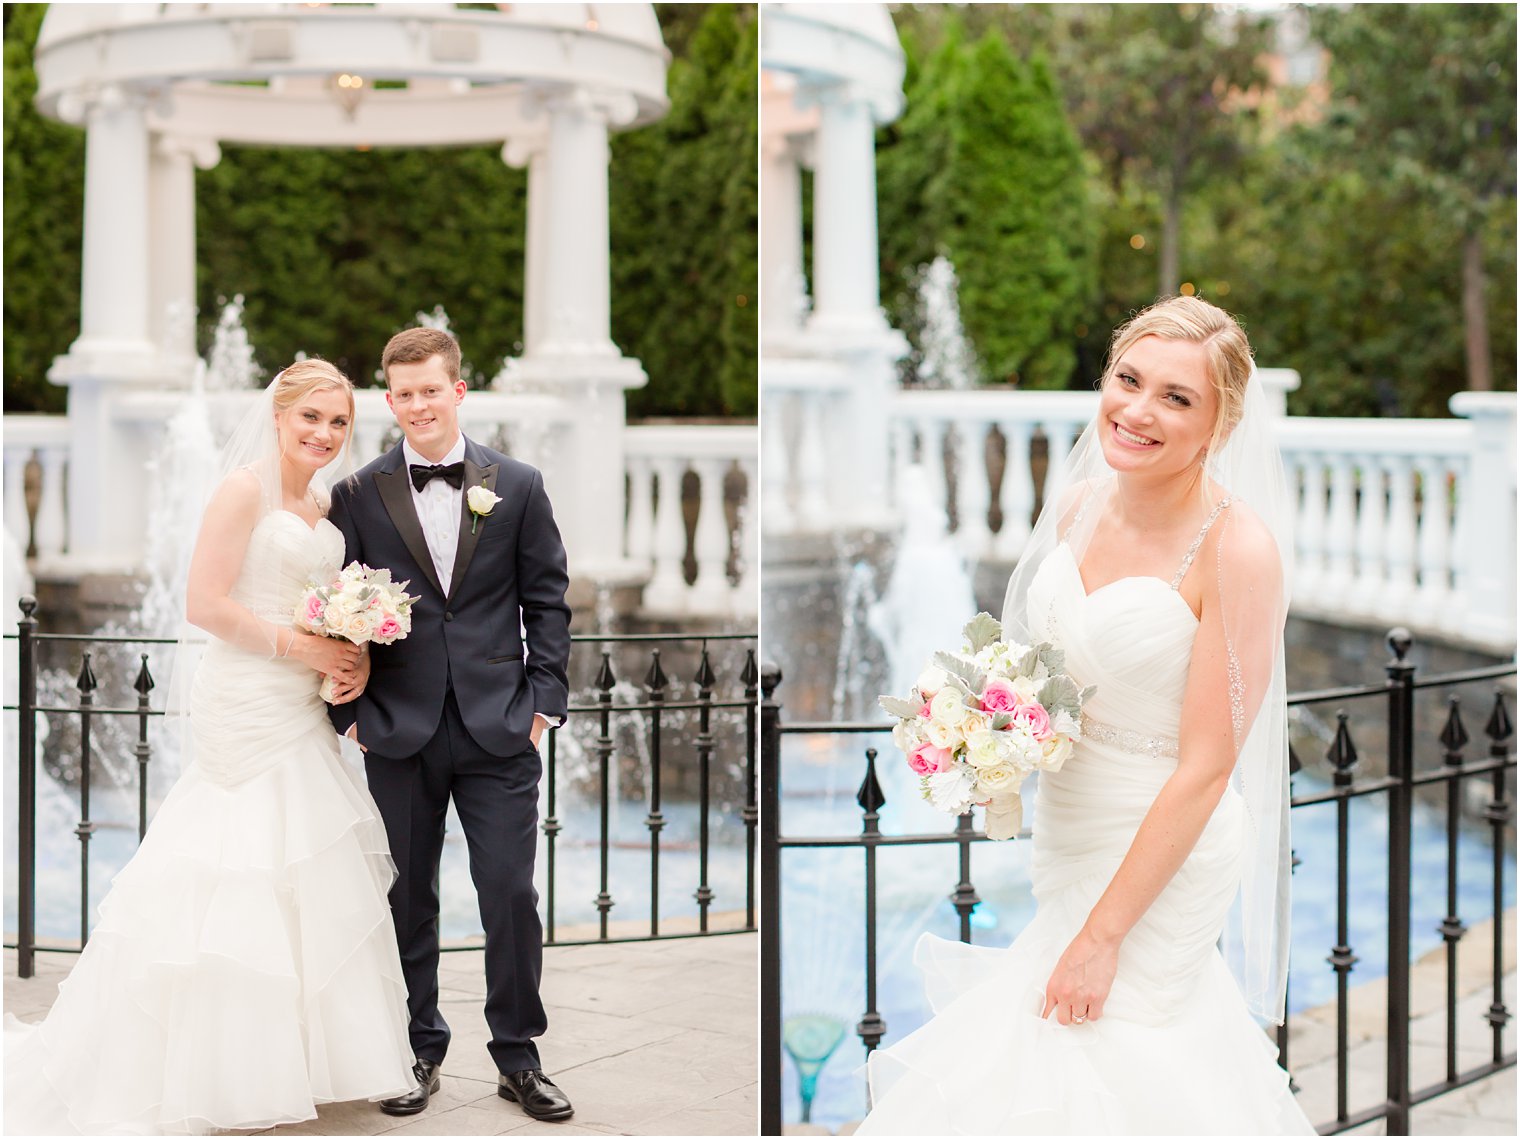 Bride and groom photos by Idalia Photography